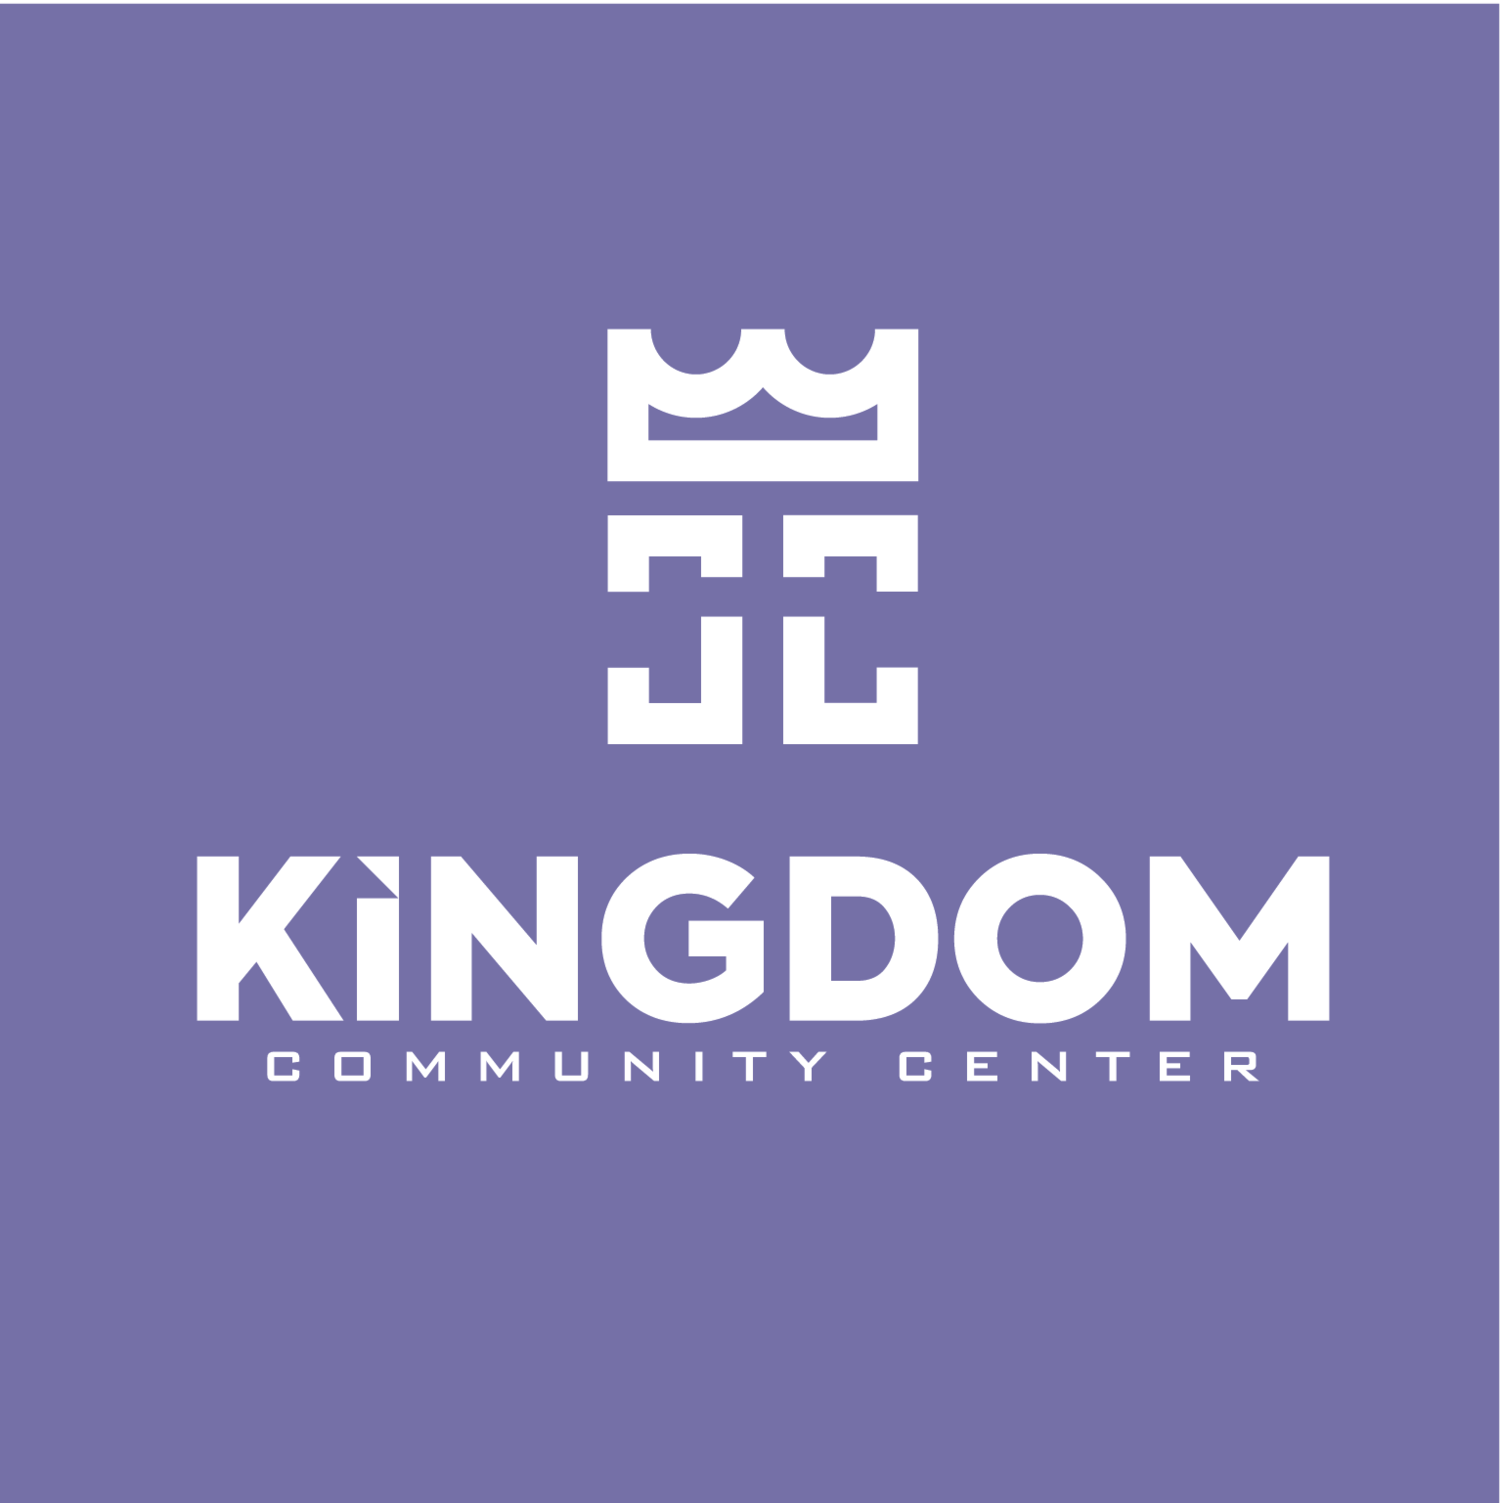 Kingdom Community Center